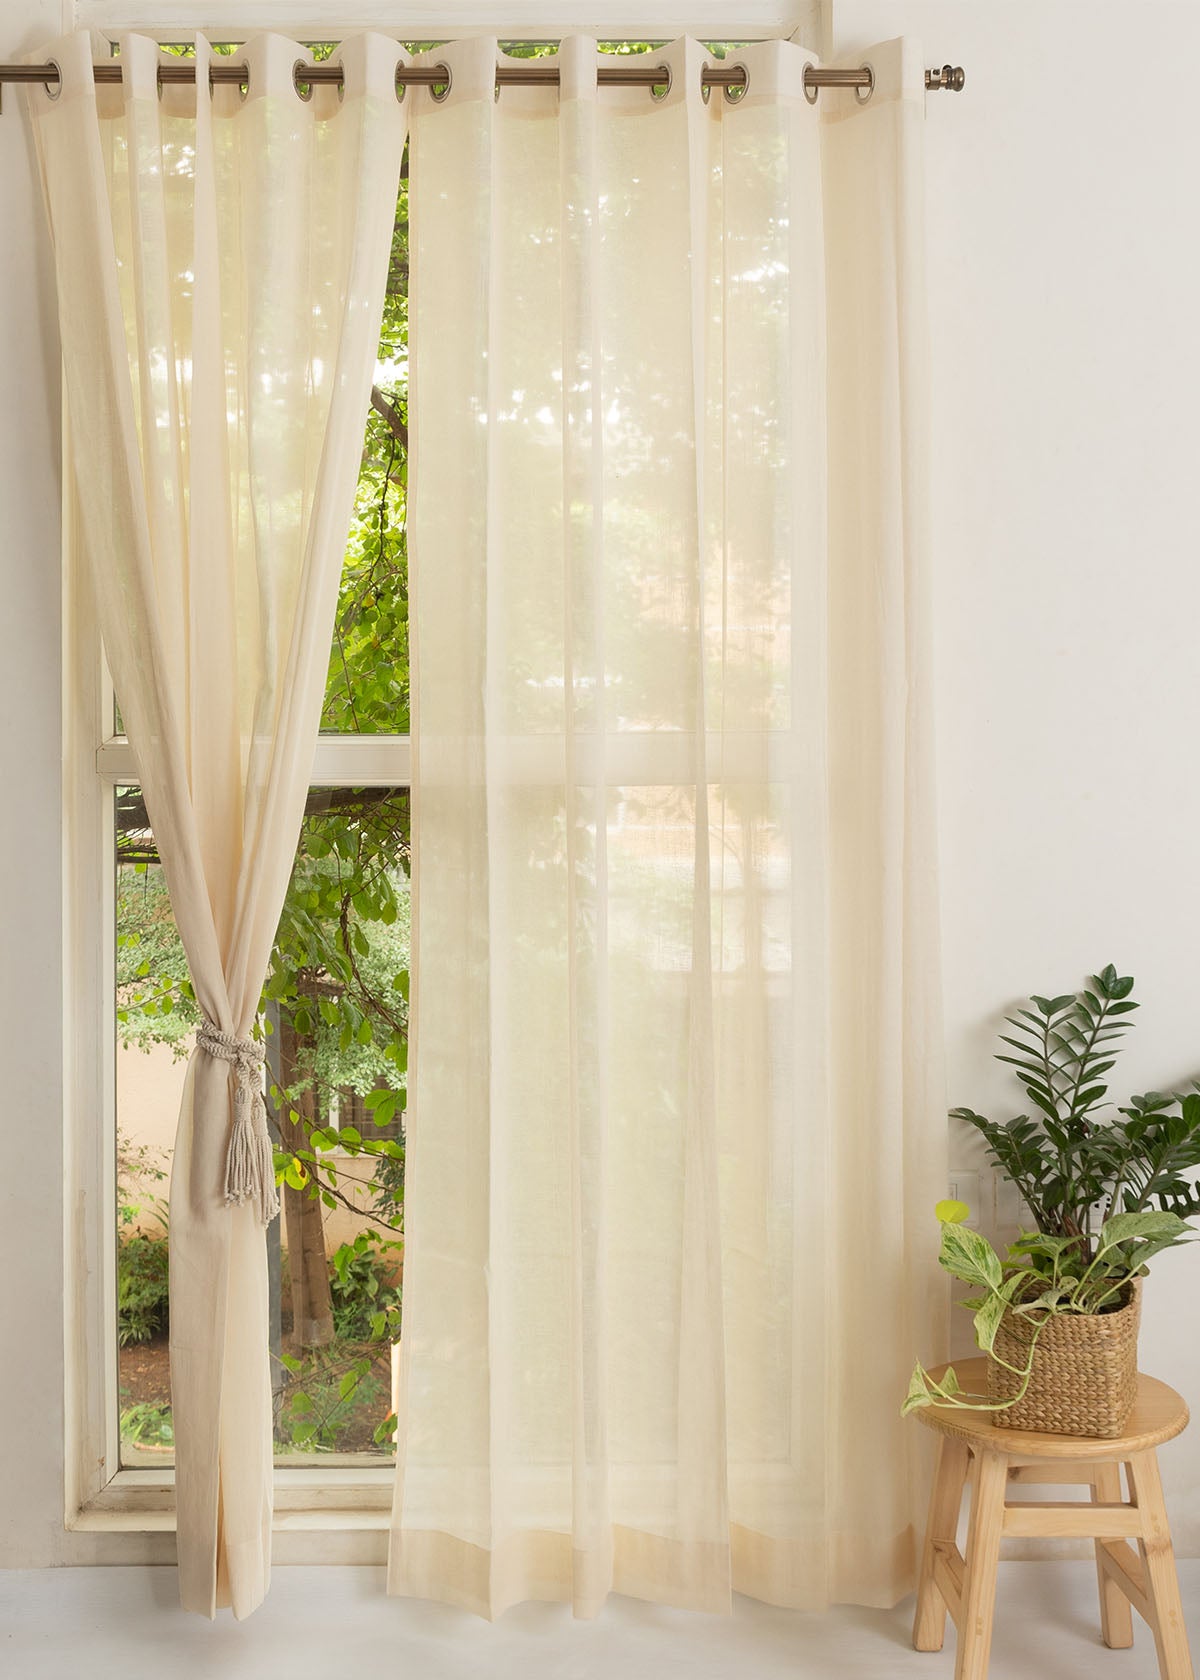 Solid Cream sheer 100% Customizable Cotton plain curtain for Living room & bedroom - Light filtering